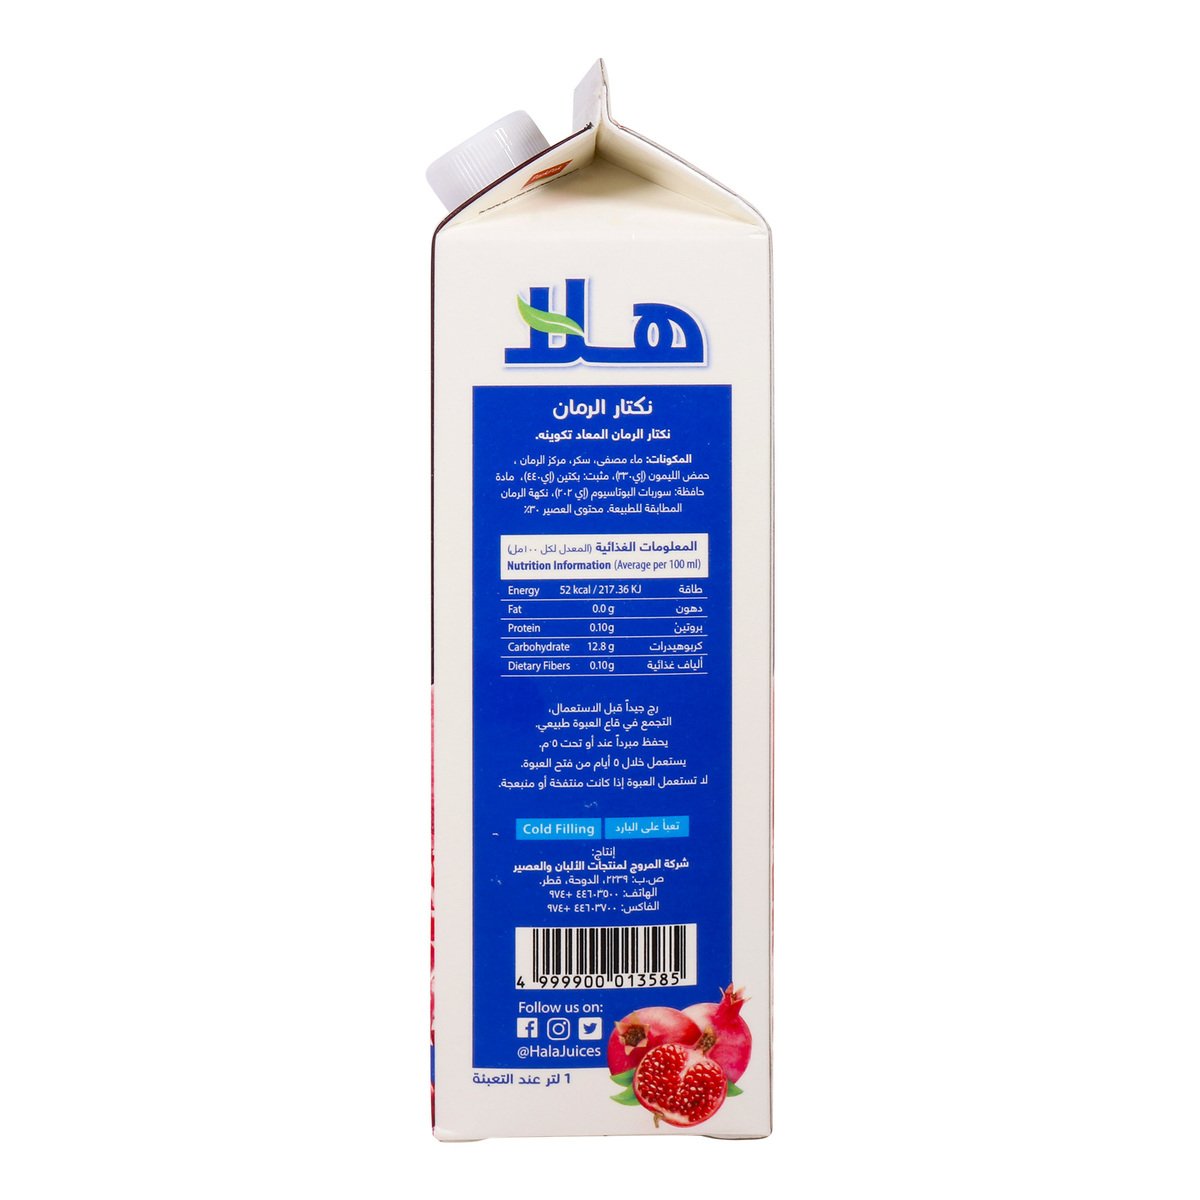 Hala Pomegranate Juice 1Litre